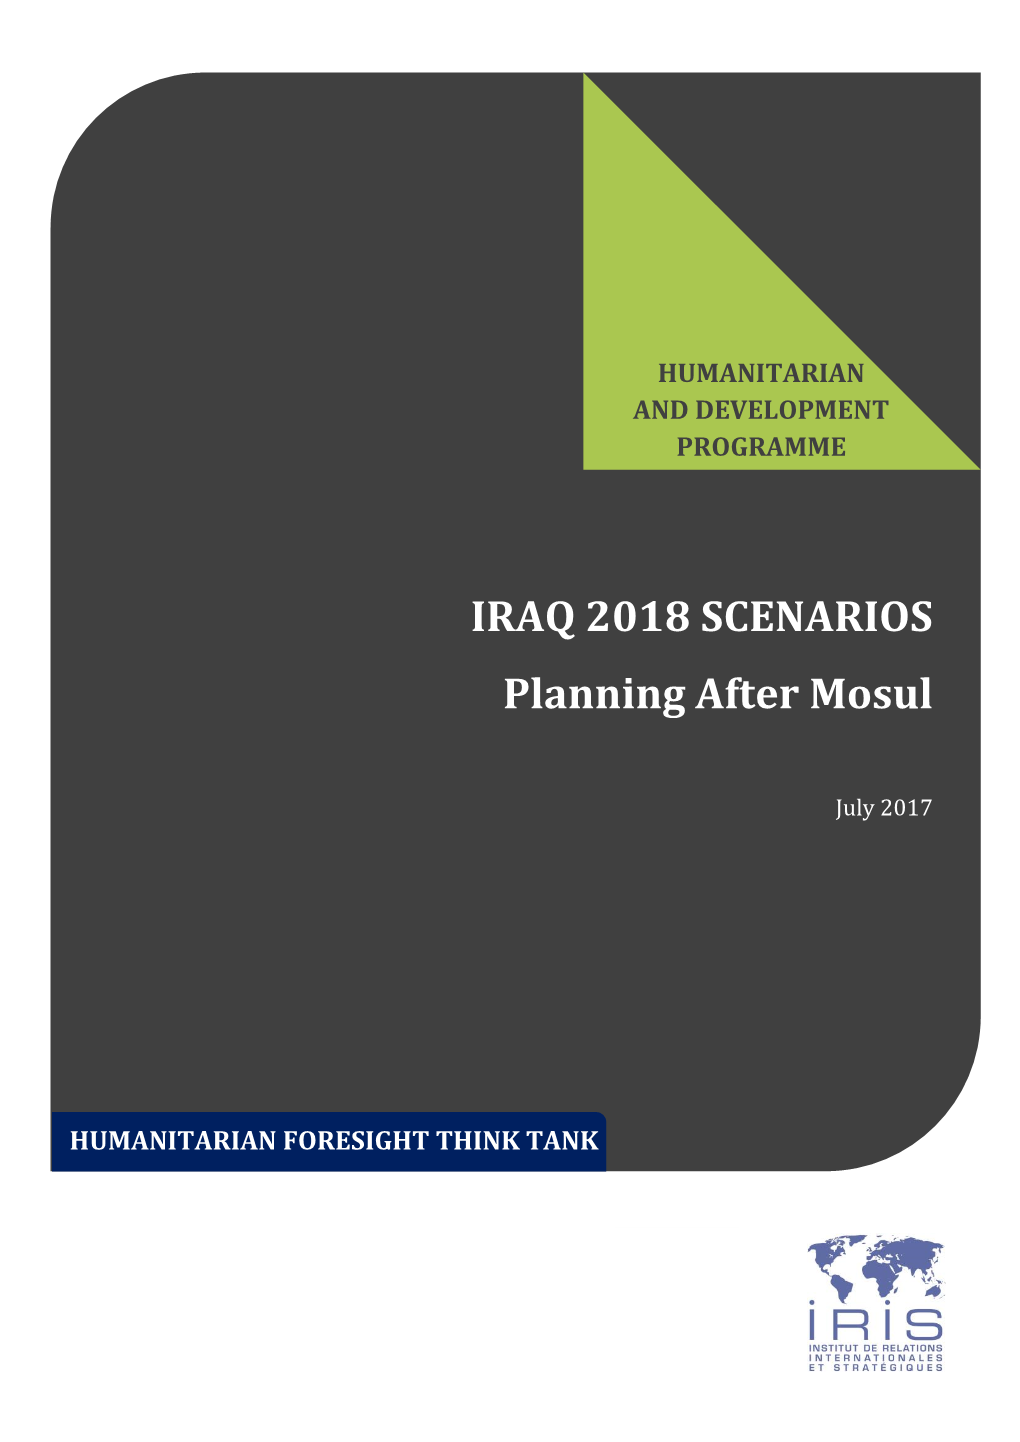 IRAQ 2018 SCENARIOS Planning After Mosul